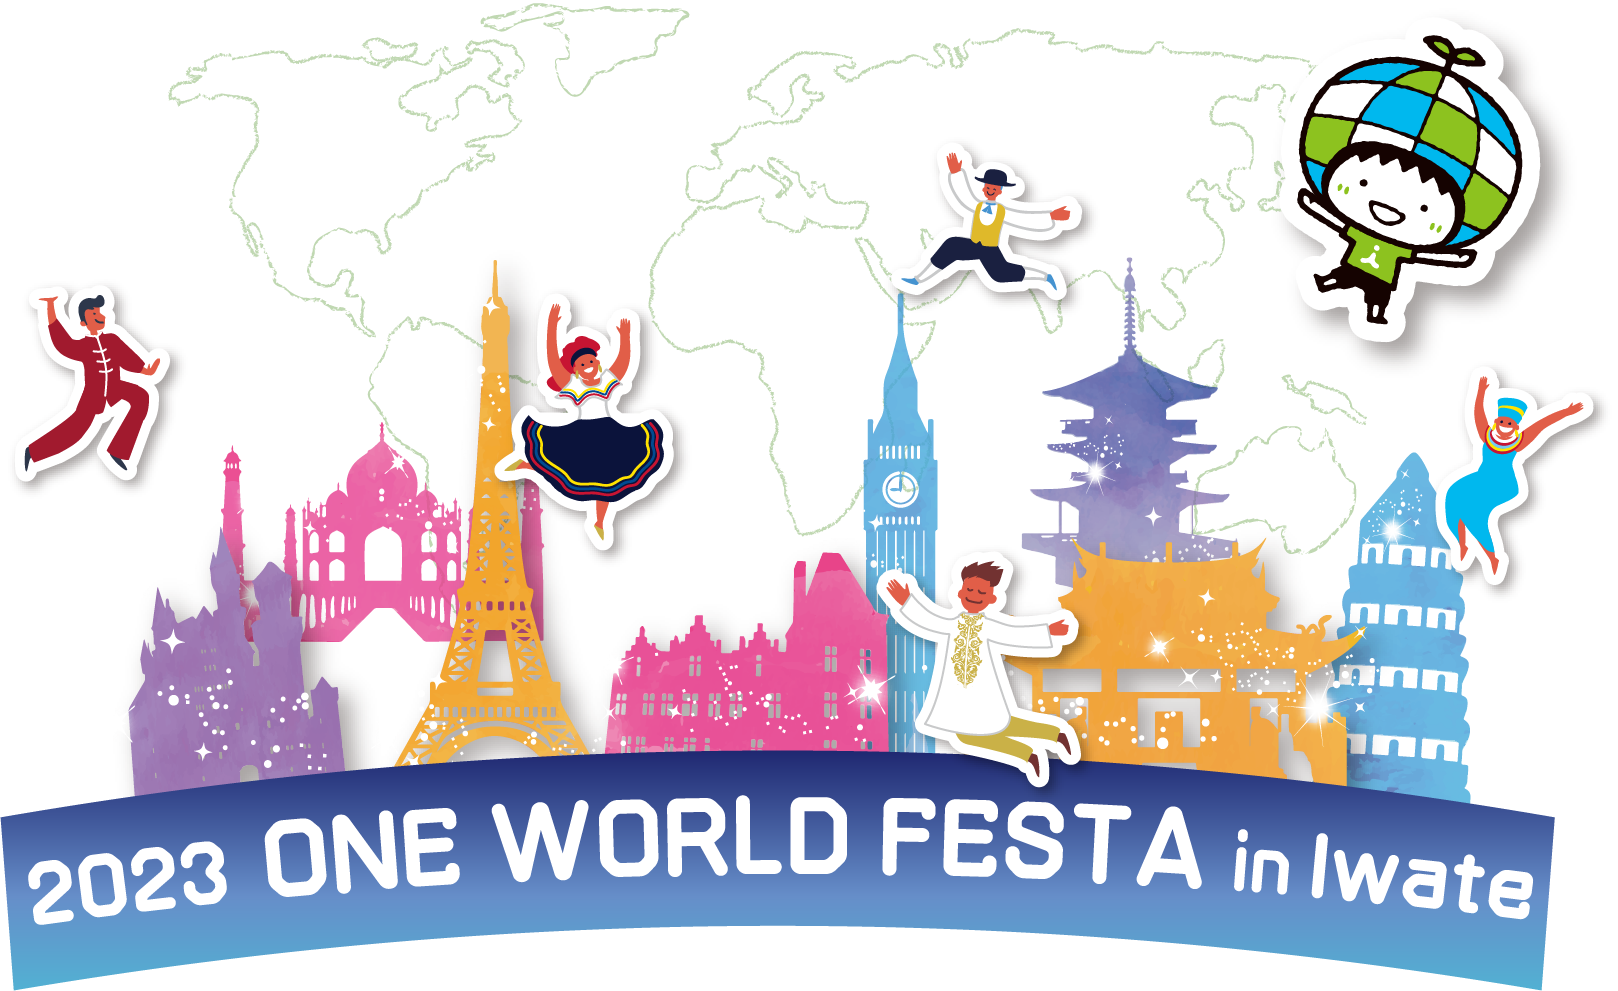 2023 One World Festa in Iwate